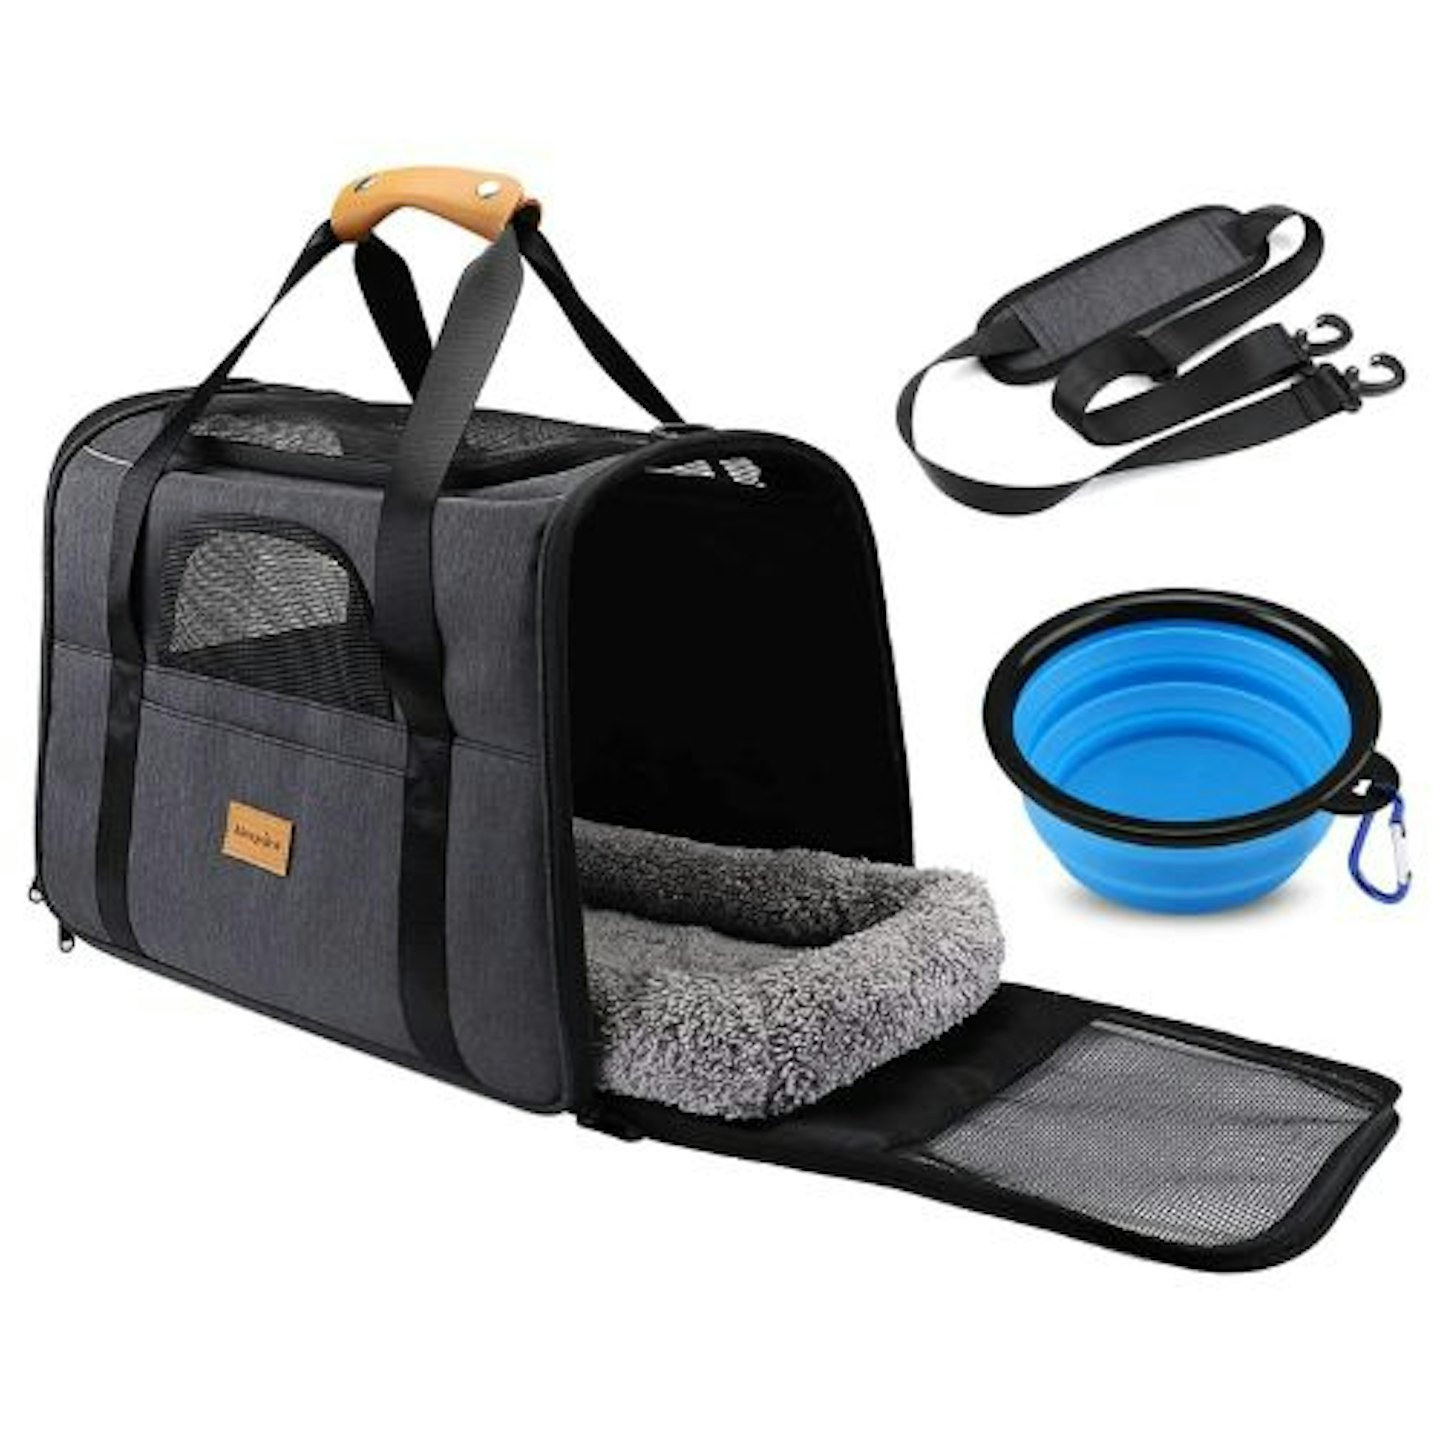 Morpilot Pet Carrier Bag, Portable Cat Carrier Bag Top Opening